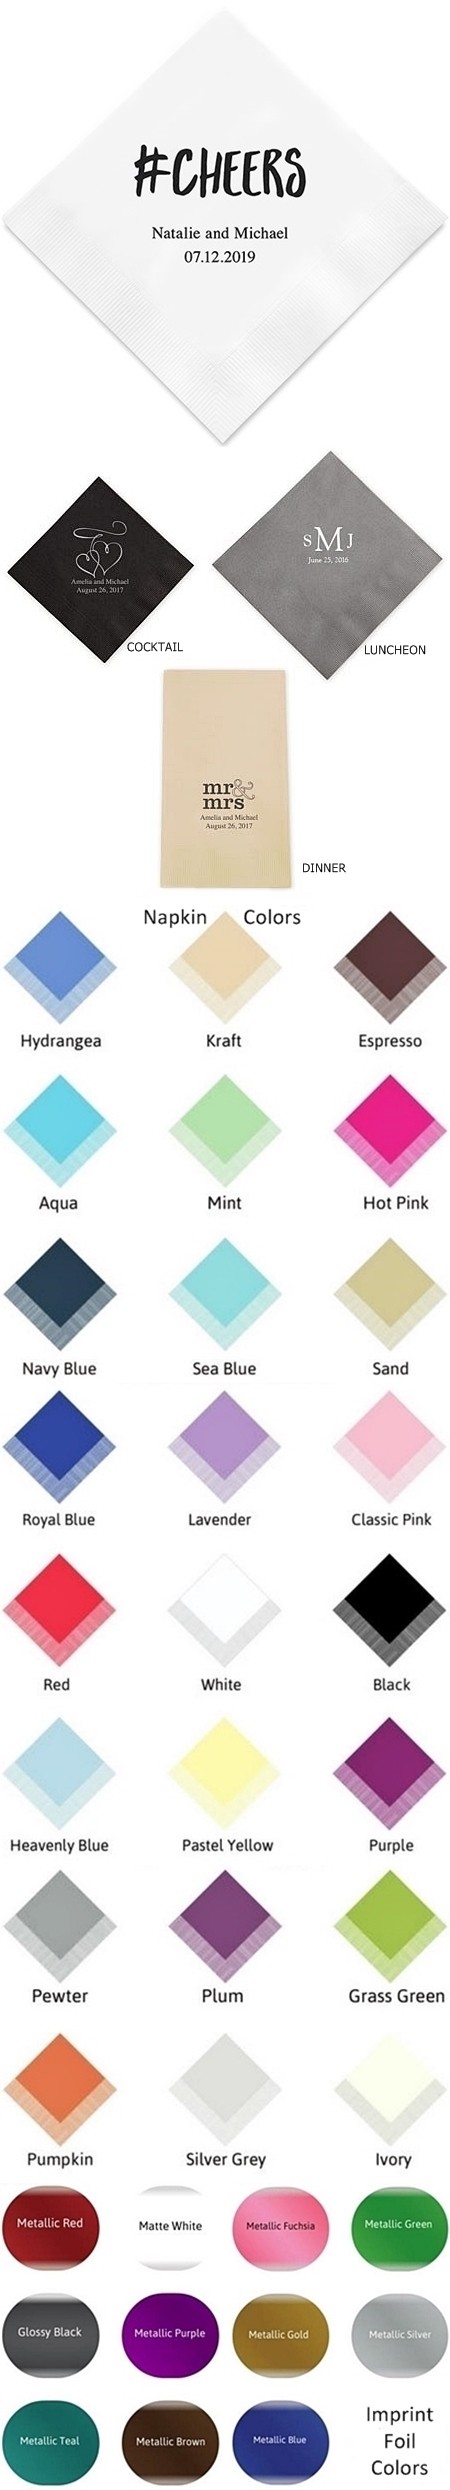 Hashtag #CHEERS Design Foil-Printed Napkins (3 Sizes) (25 Colors)